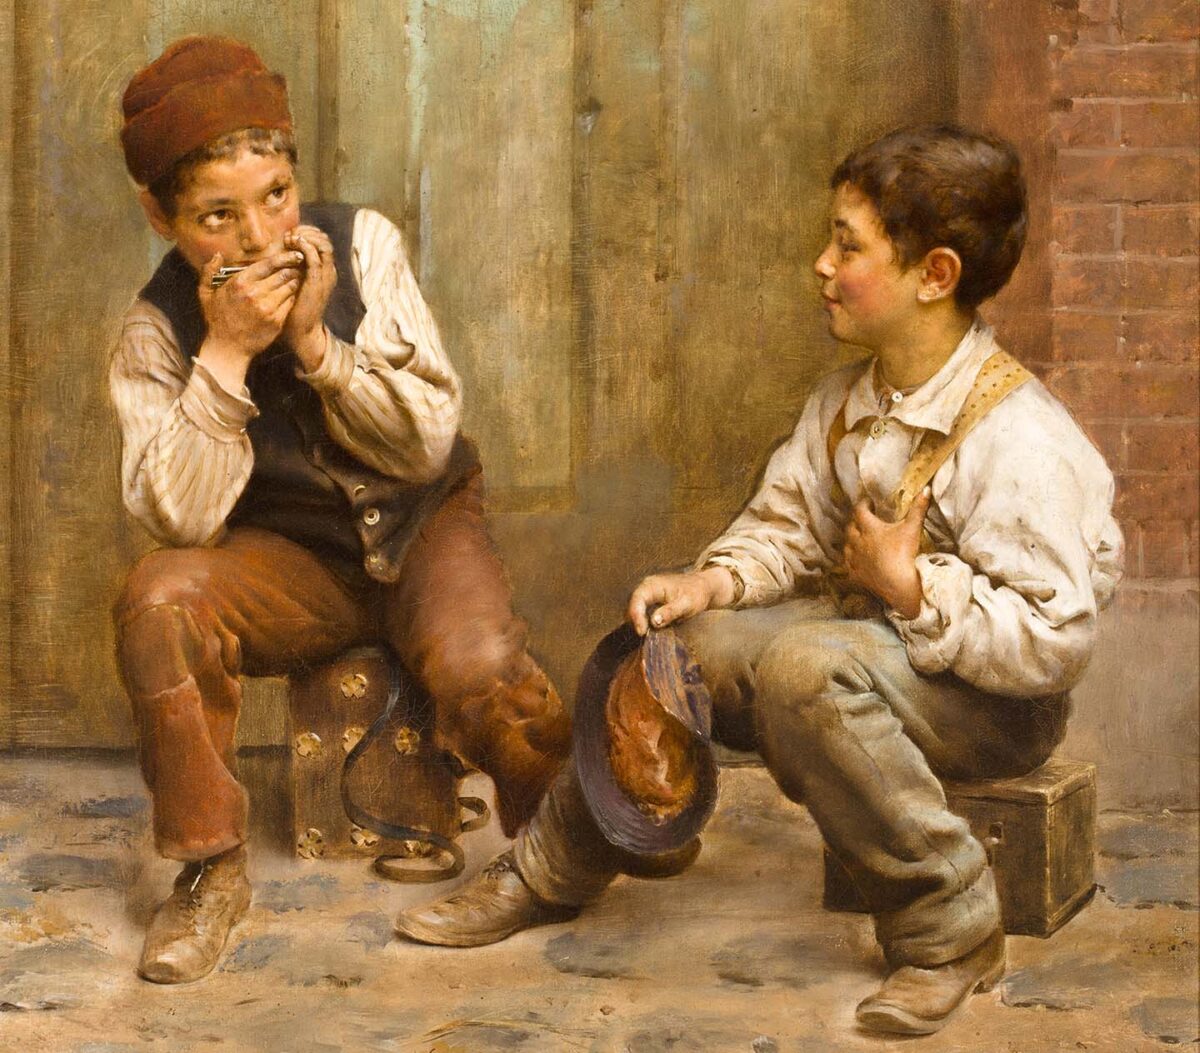 Detail of  "Shoeshine Boys," 1889, by Karl Witkowski. (Public Domain)